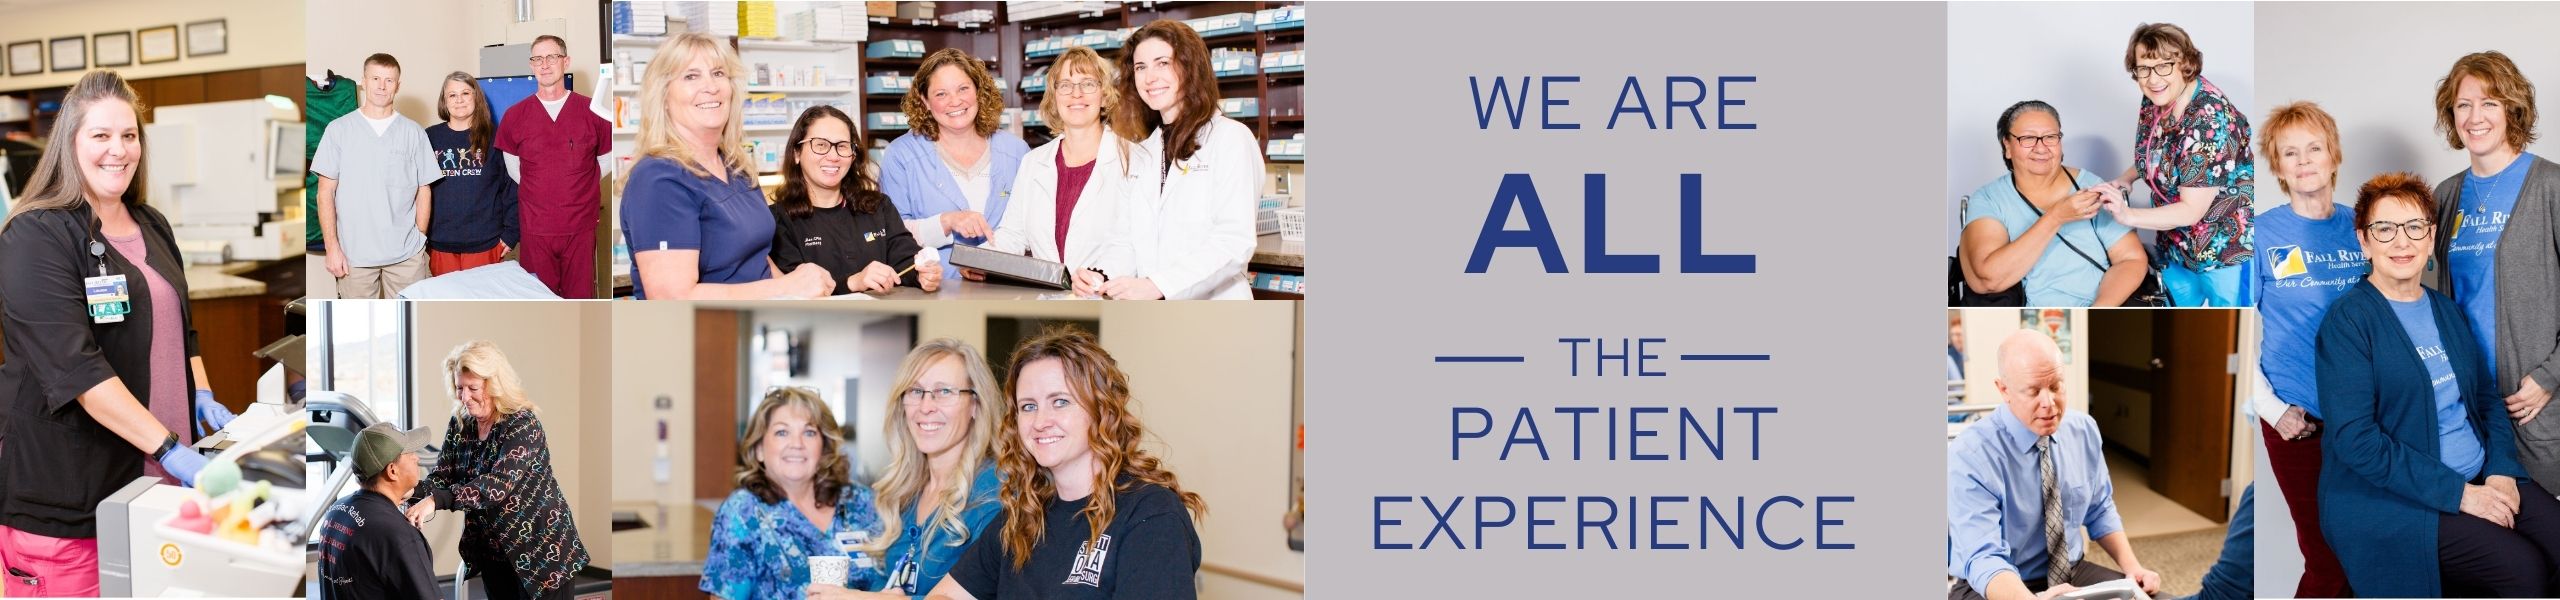 Patients Experience Week